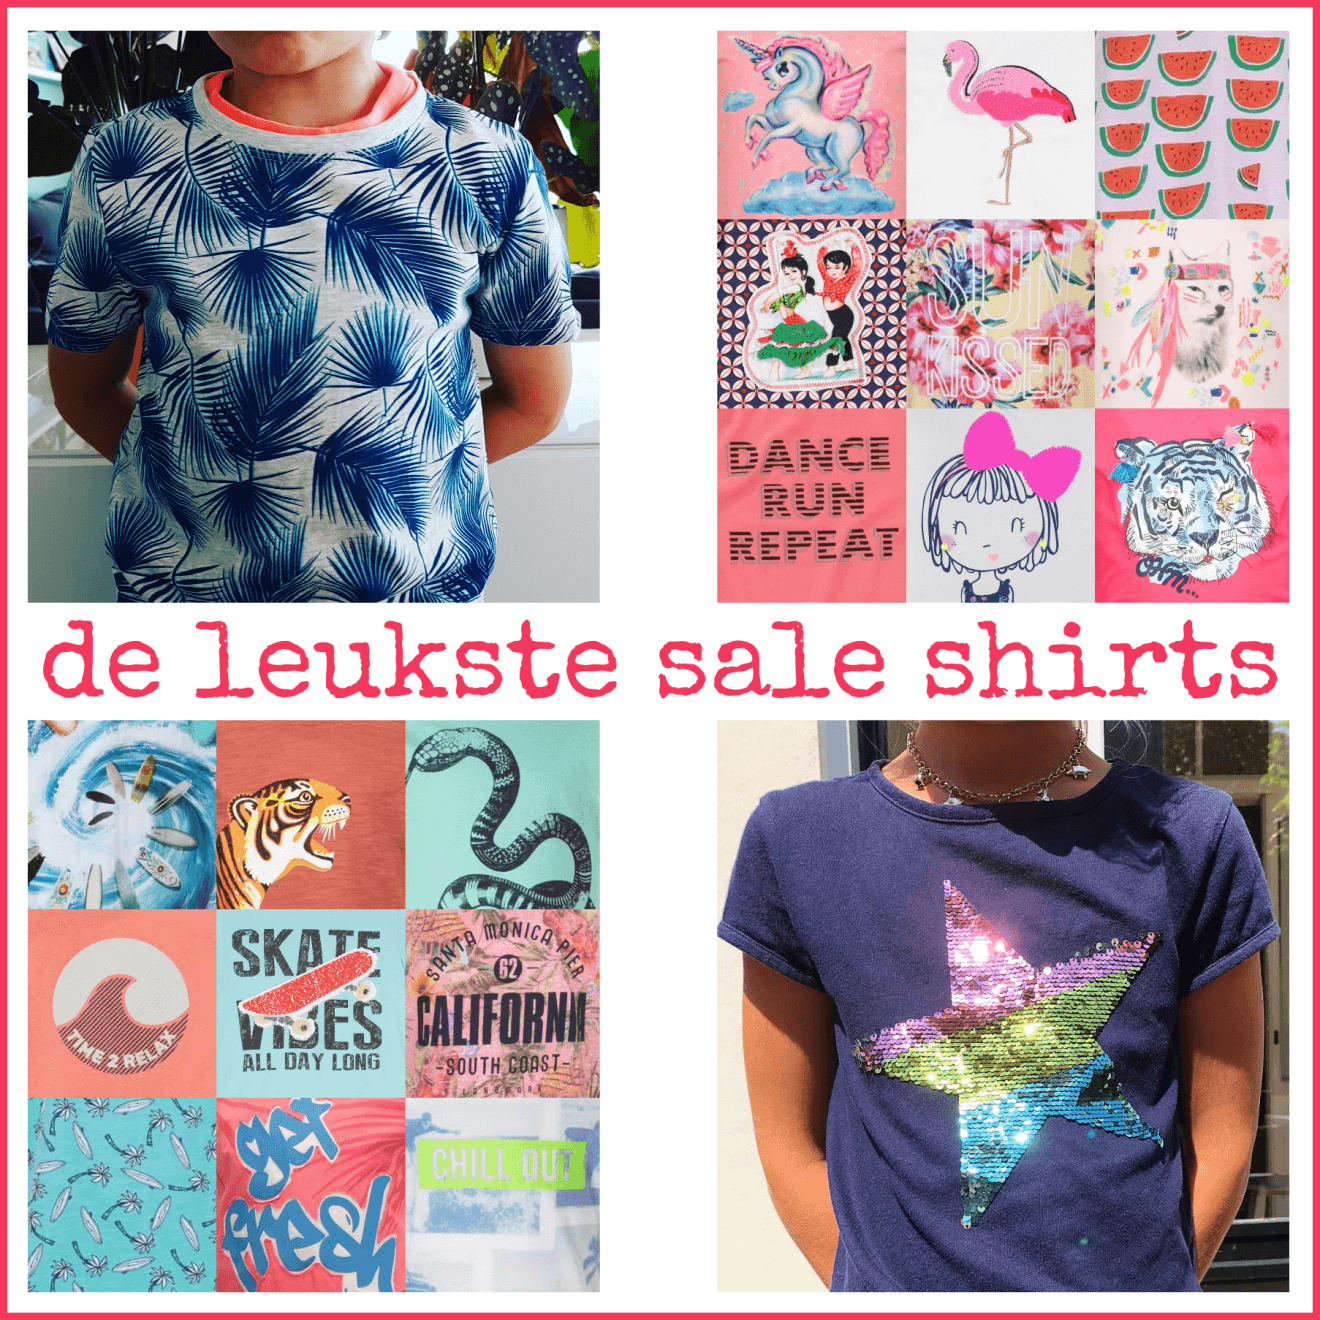 uitverkoop: de leukste sale shirts voor jongens en meisjes #leukmetkids #kinderkleding #meisjeskleding